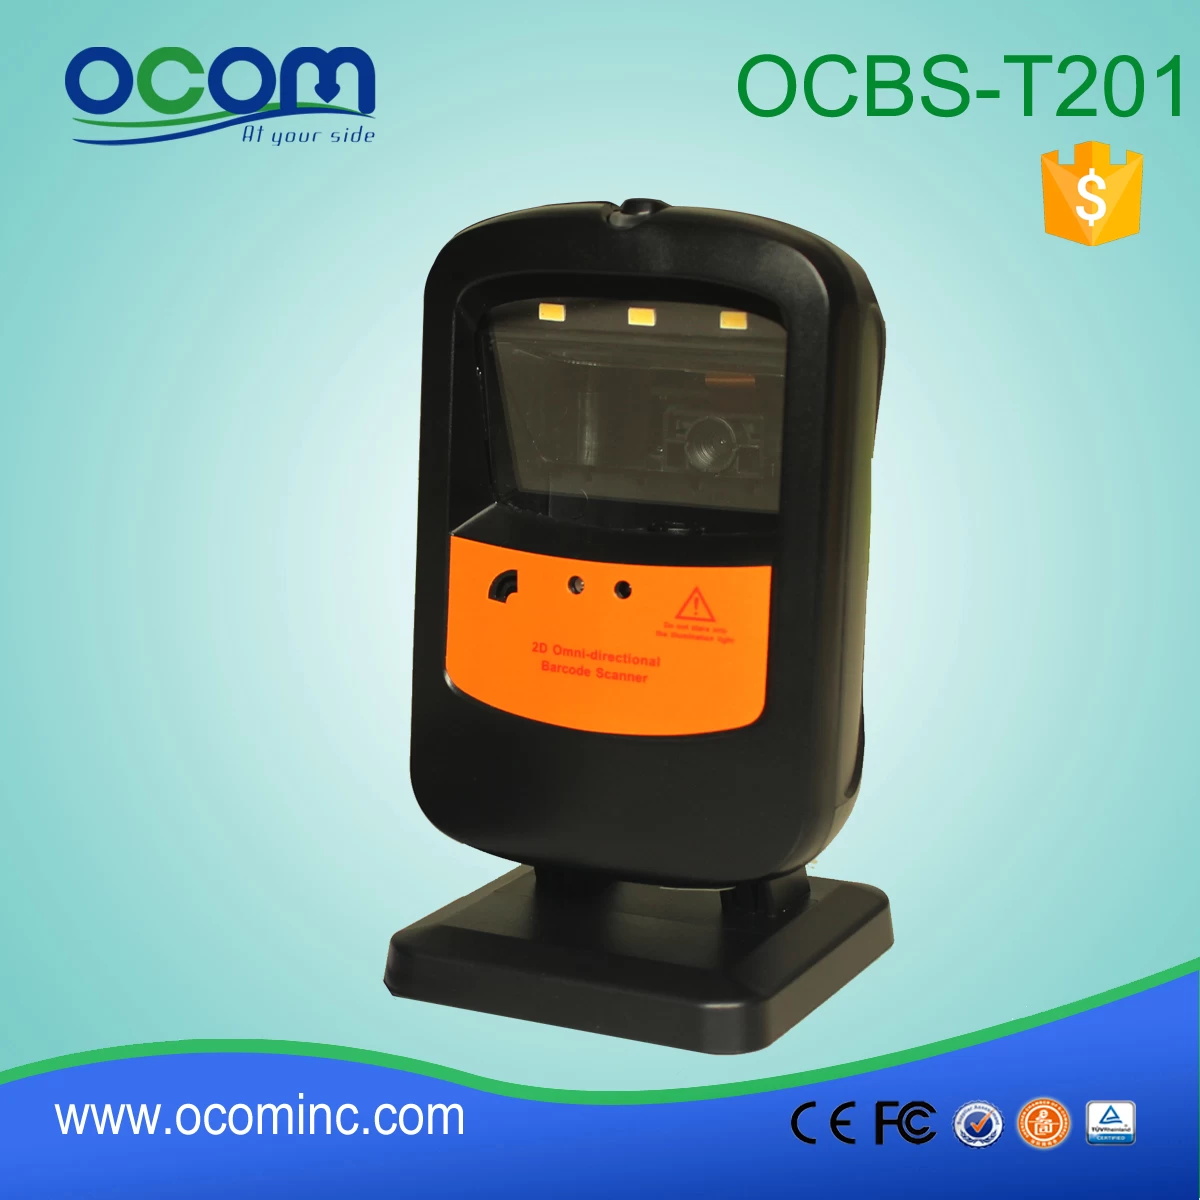 OCBS-T201:omnidirectional barcode scanner machine, barcode scanner parts